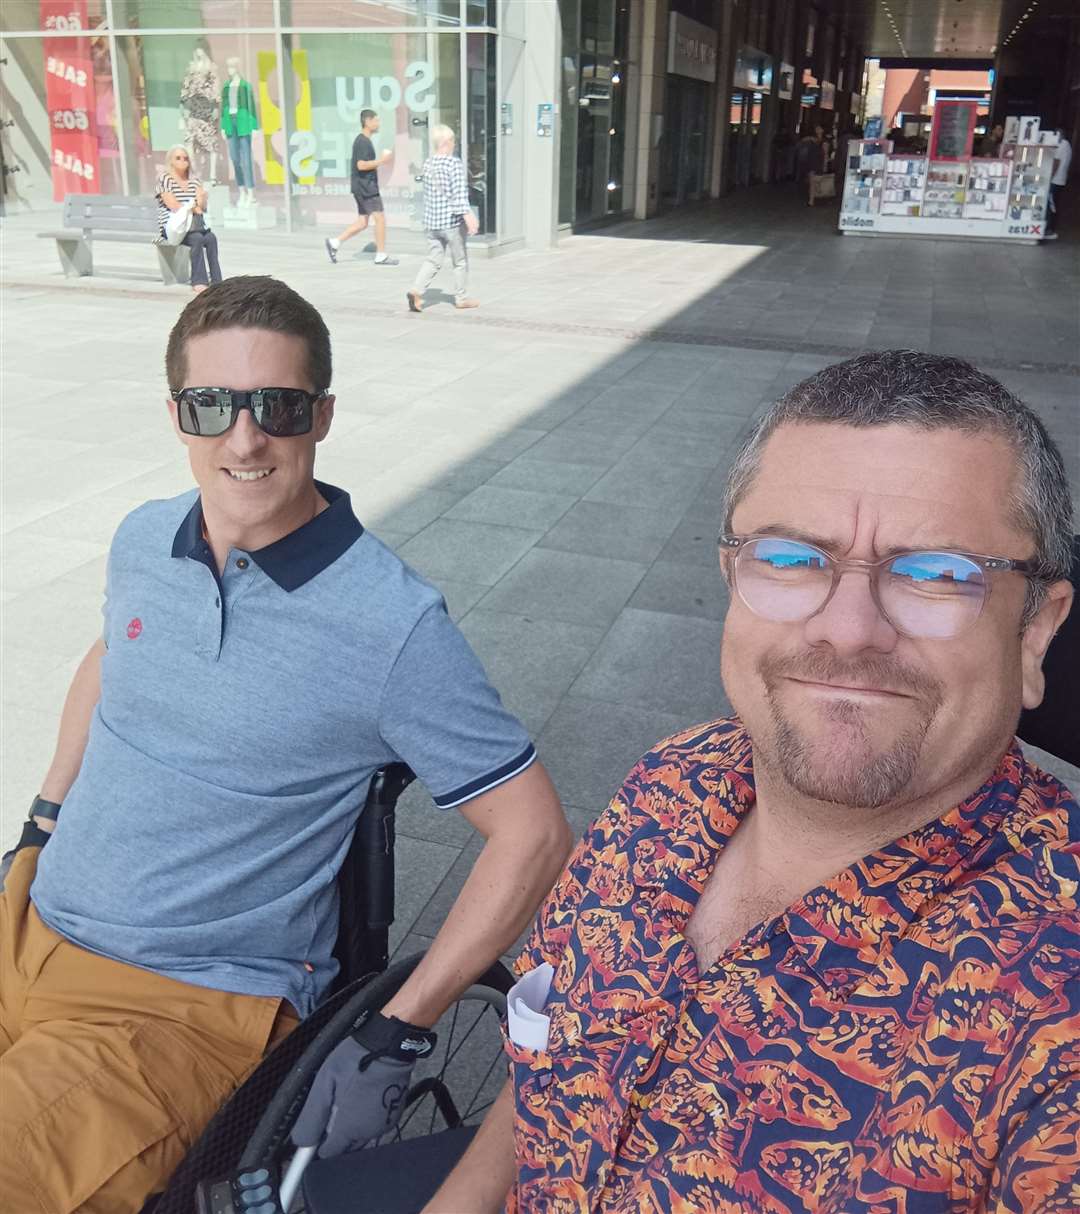 Adam (left) and Tim exploring Folkestone by wheelchair